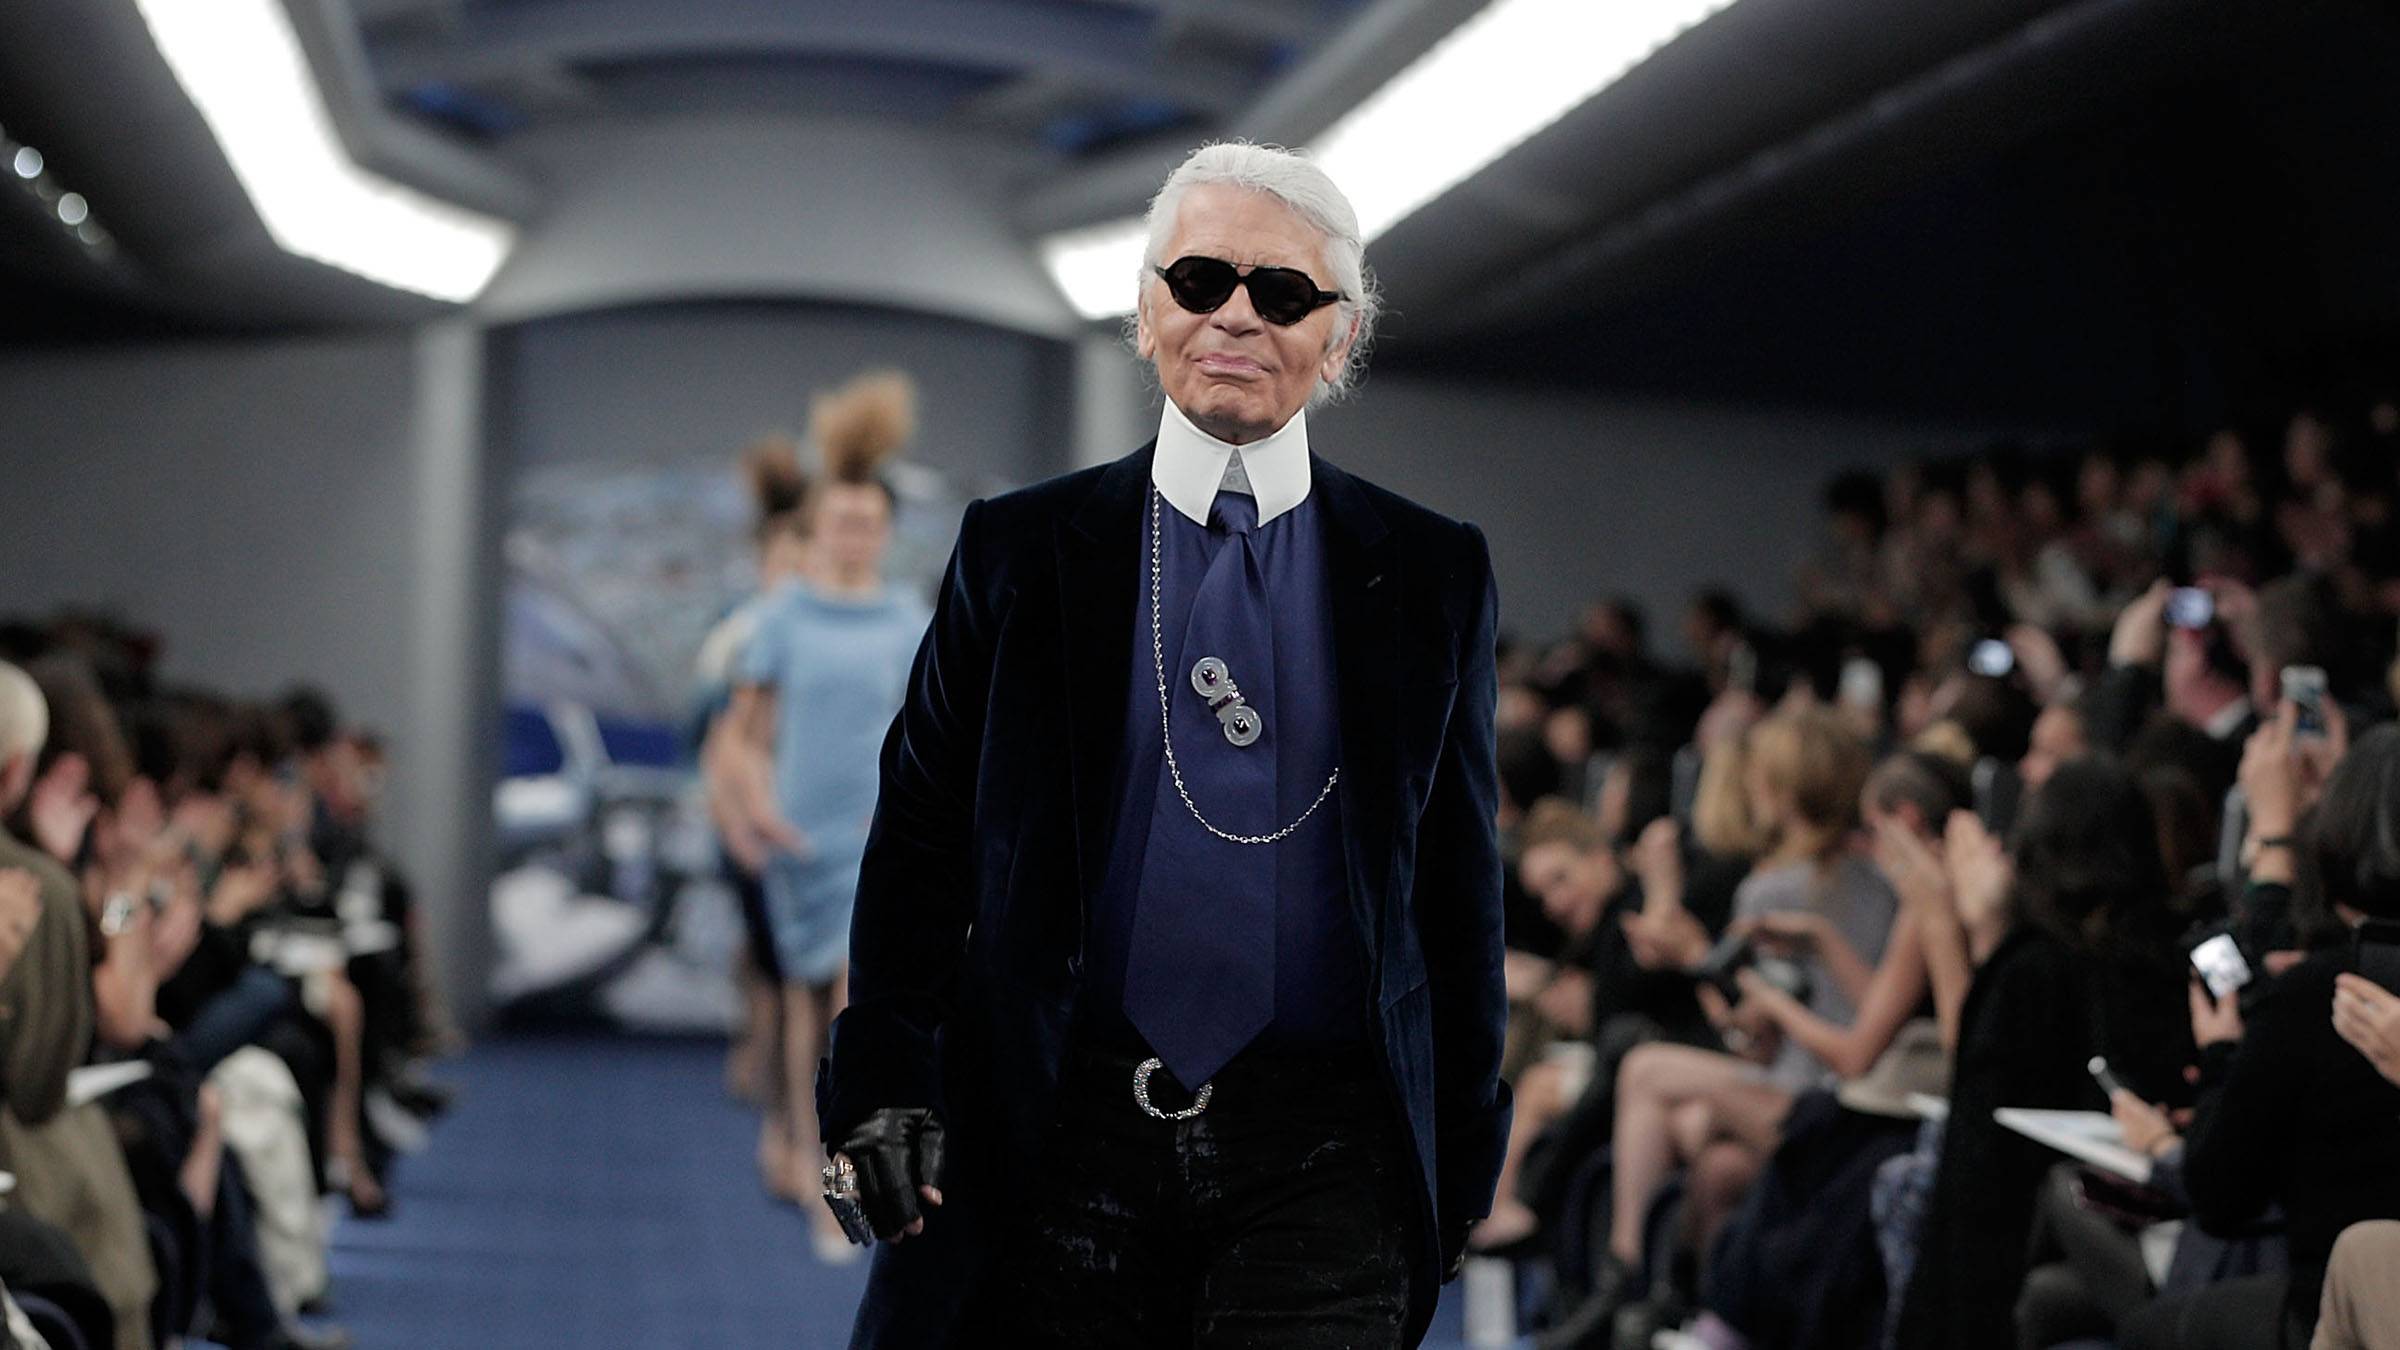 Edelsteen Koppeling Dank u voor uw hulp Karl Lagerfeld: A Line of Beauty' To Be 2023 MET Gala Theme | News | BET